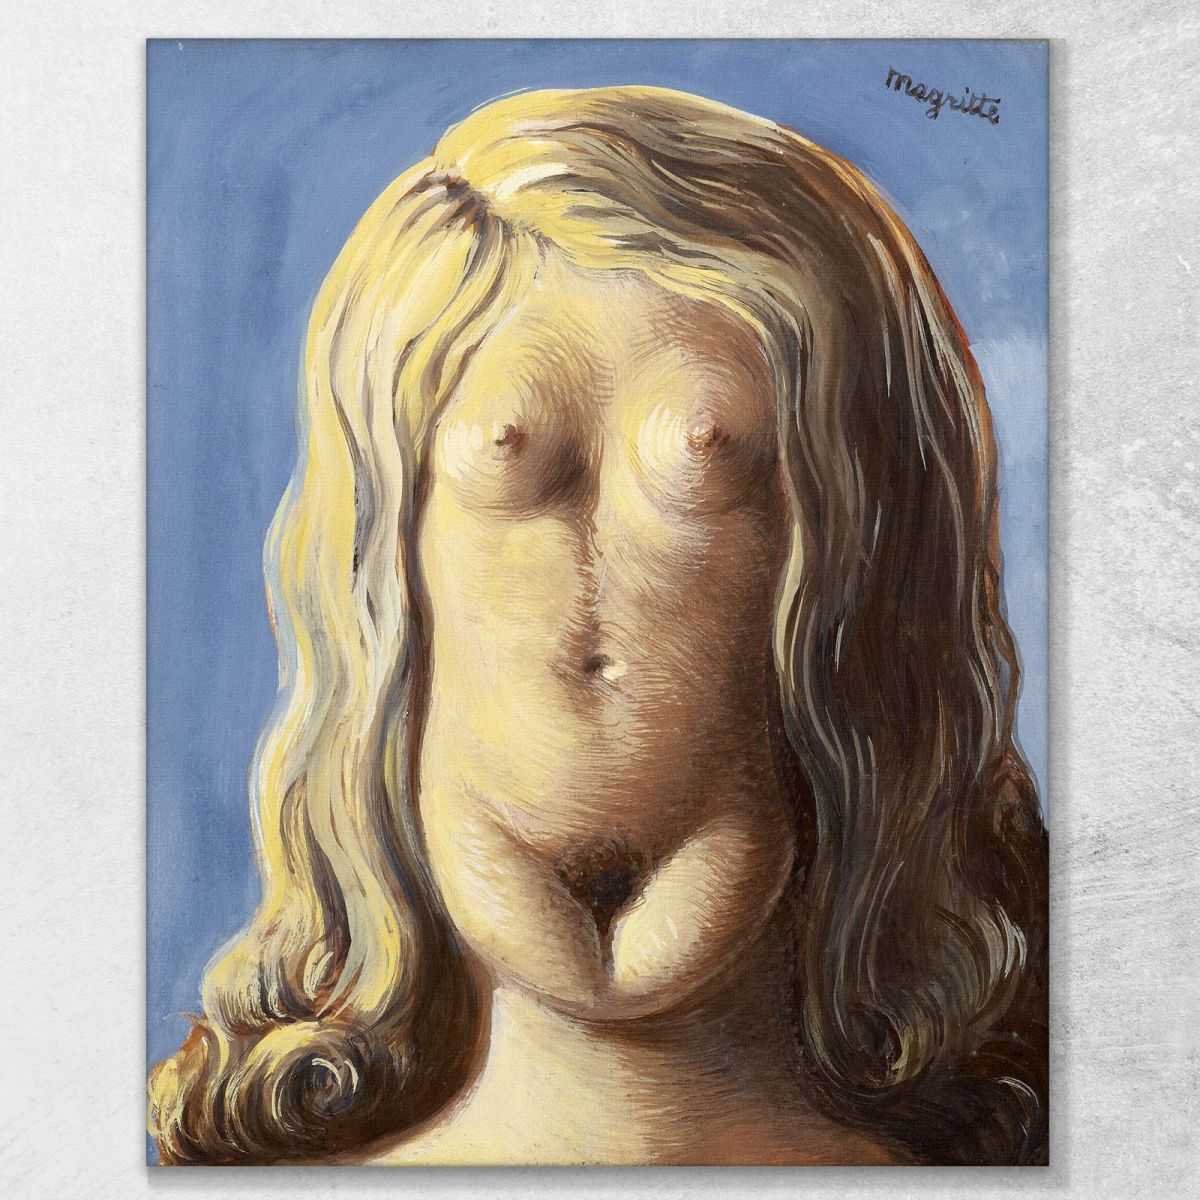 Stupro - 2 Magritte René quadro stampa su tela RM30